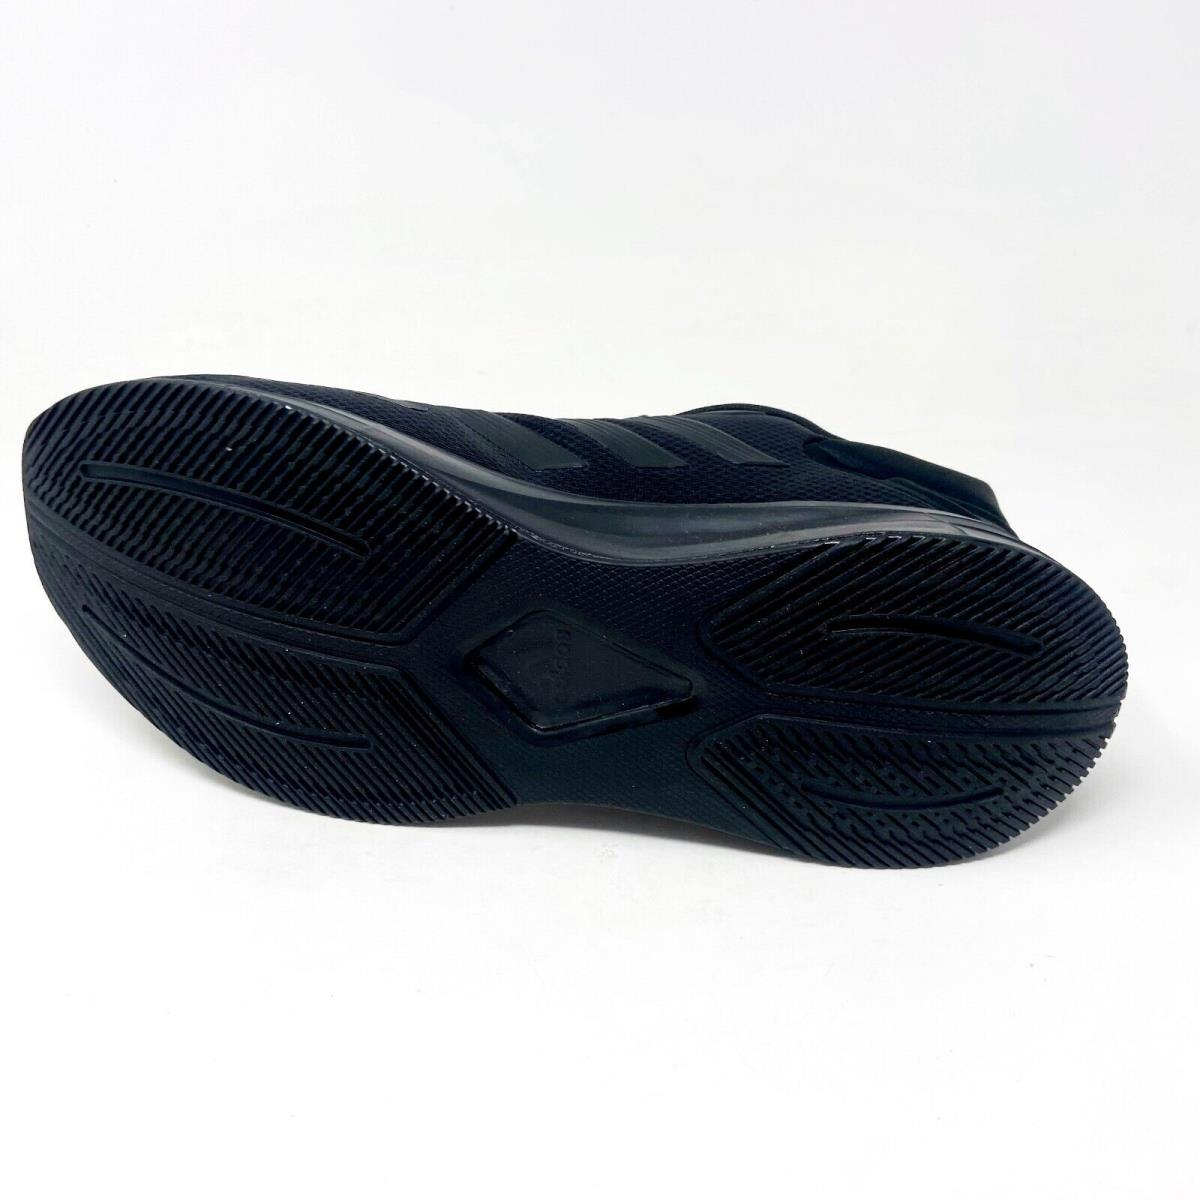 Adidas shoes Duramo - Black 4